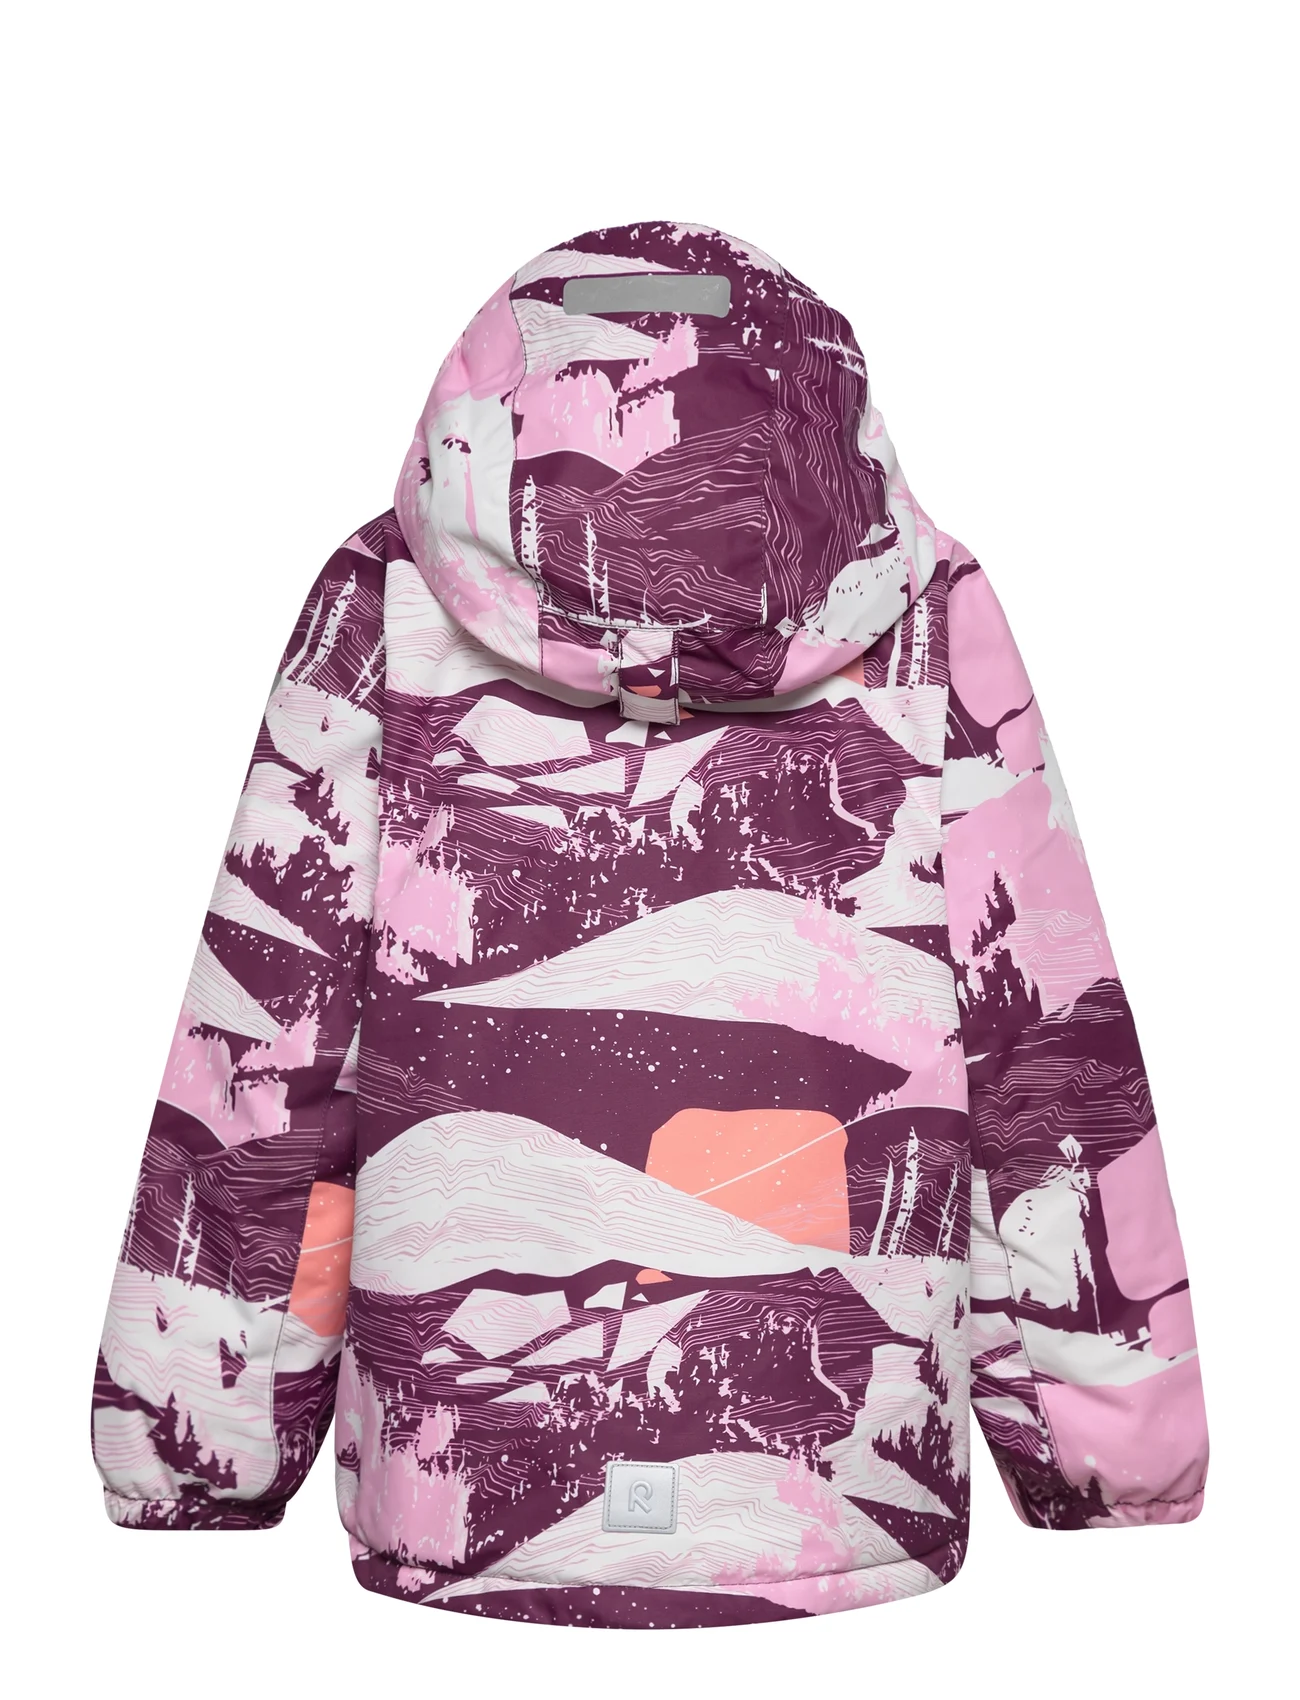 Reima - Winter jacket, Kanto - winterjacken - deep purple - 1